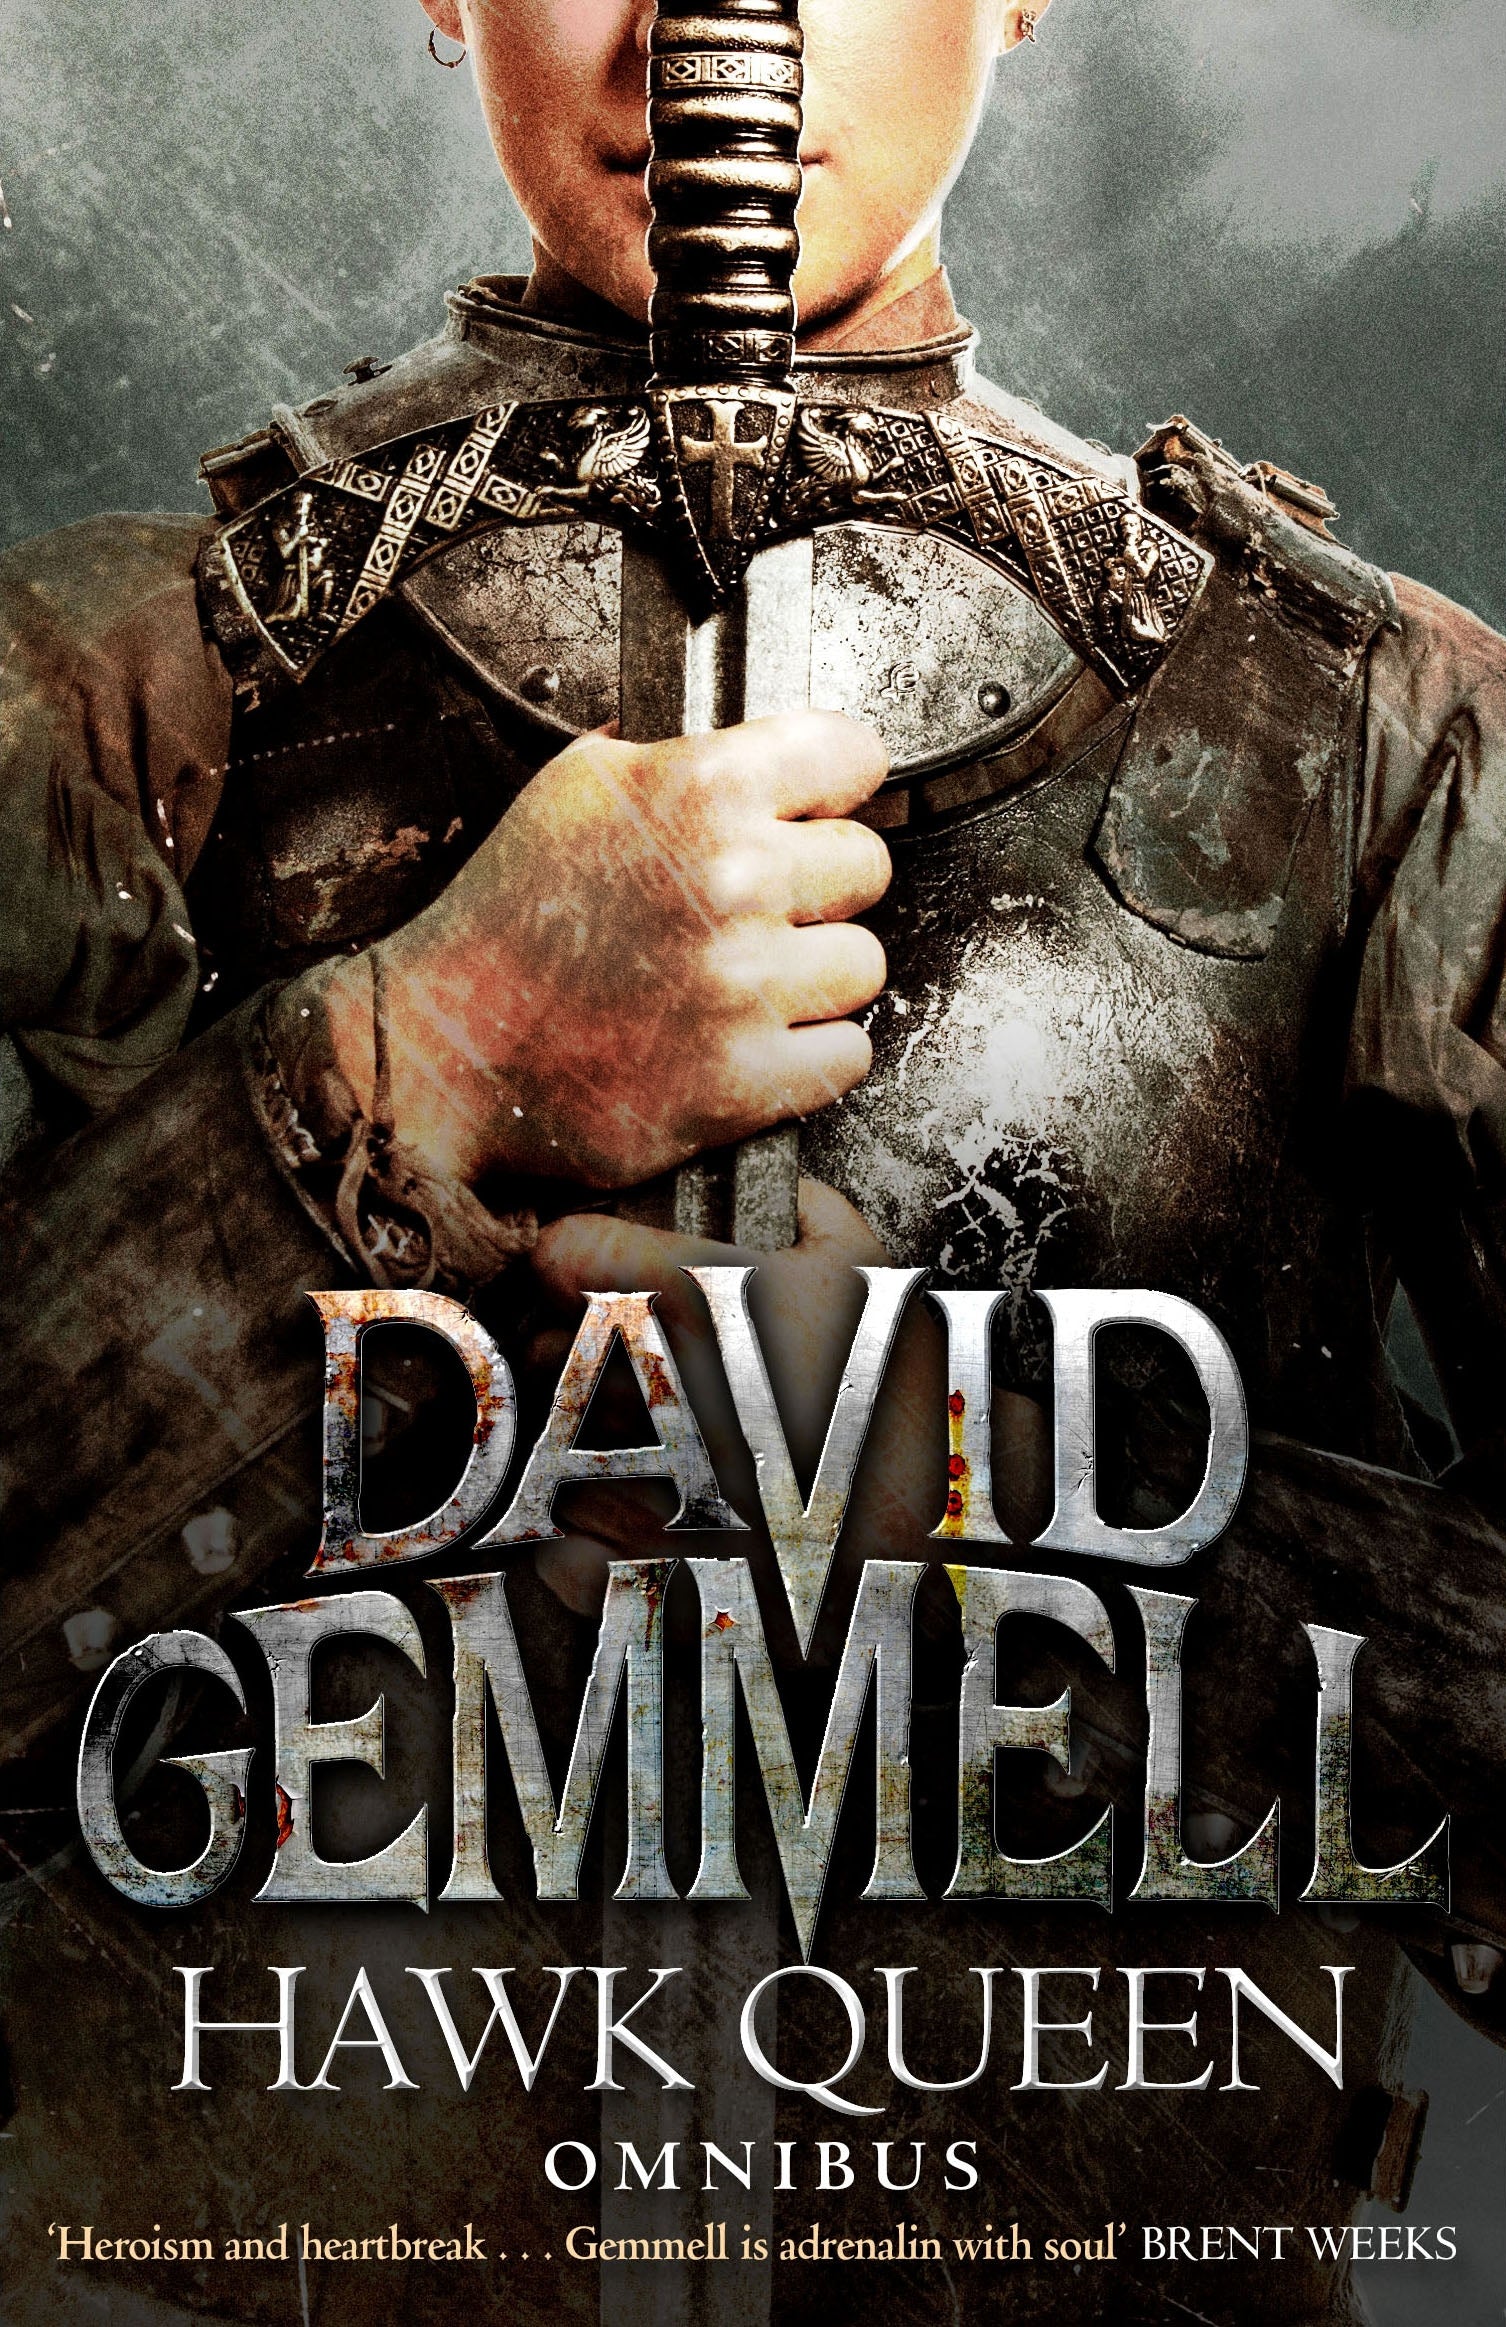 Hawk Queen: The Omnibus Edition by David Gemmell